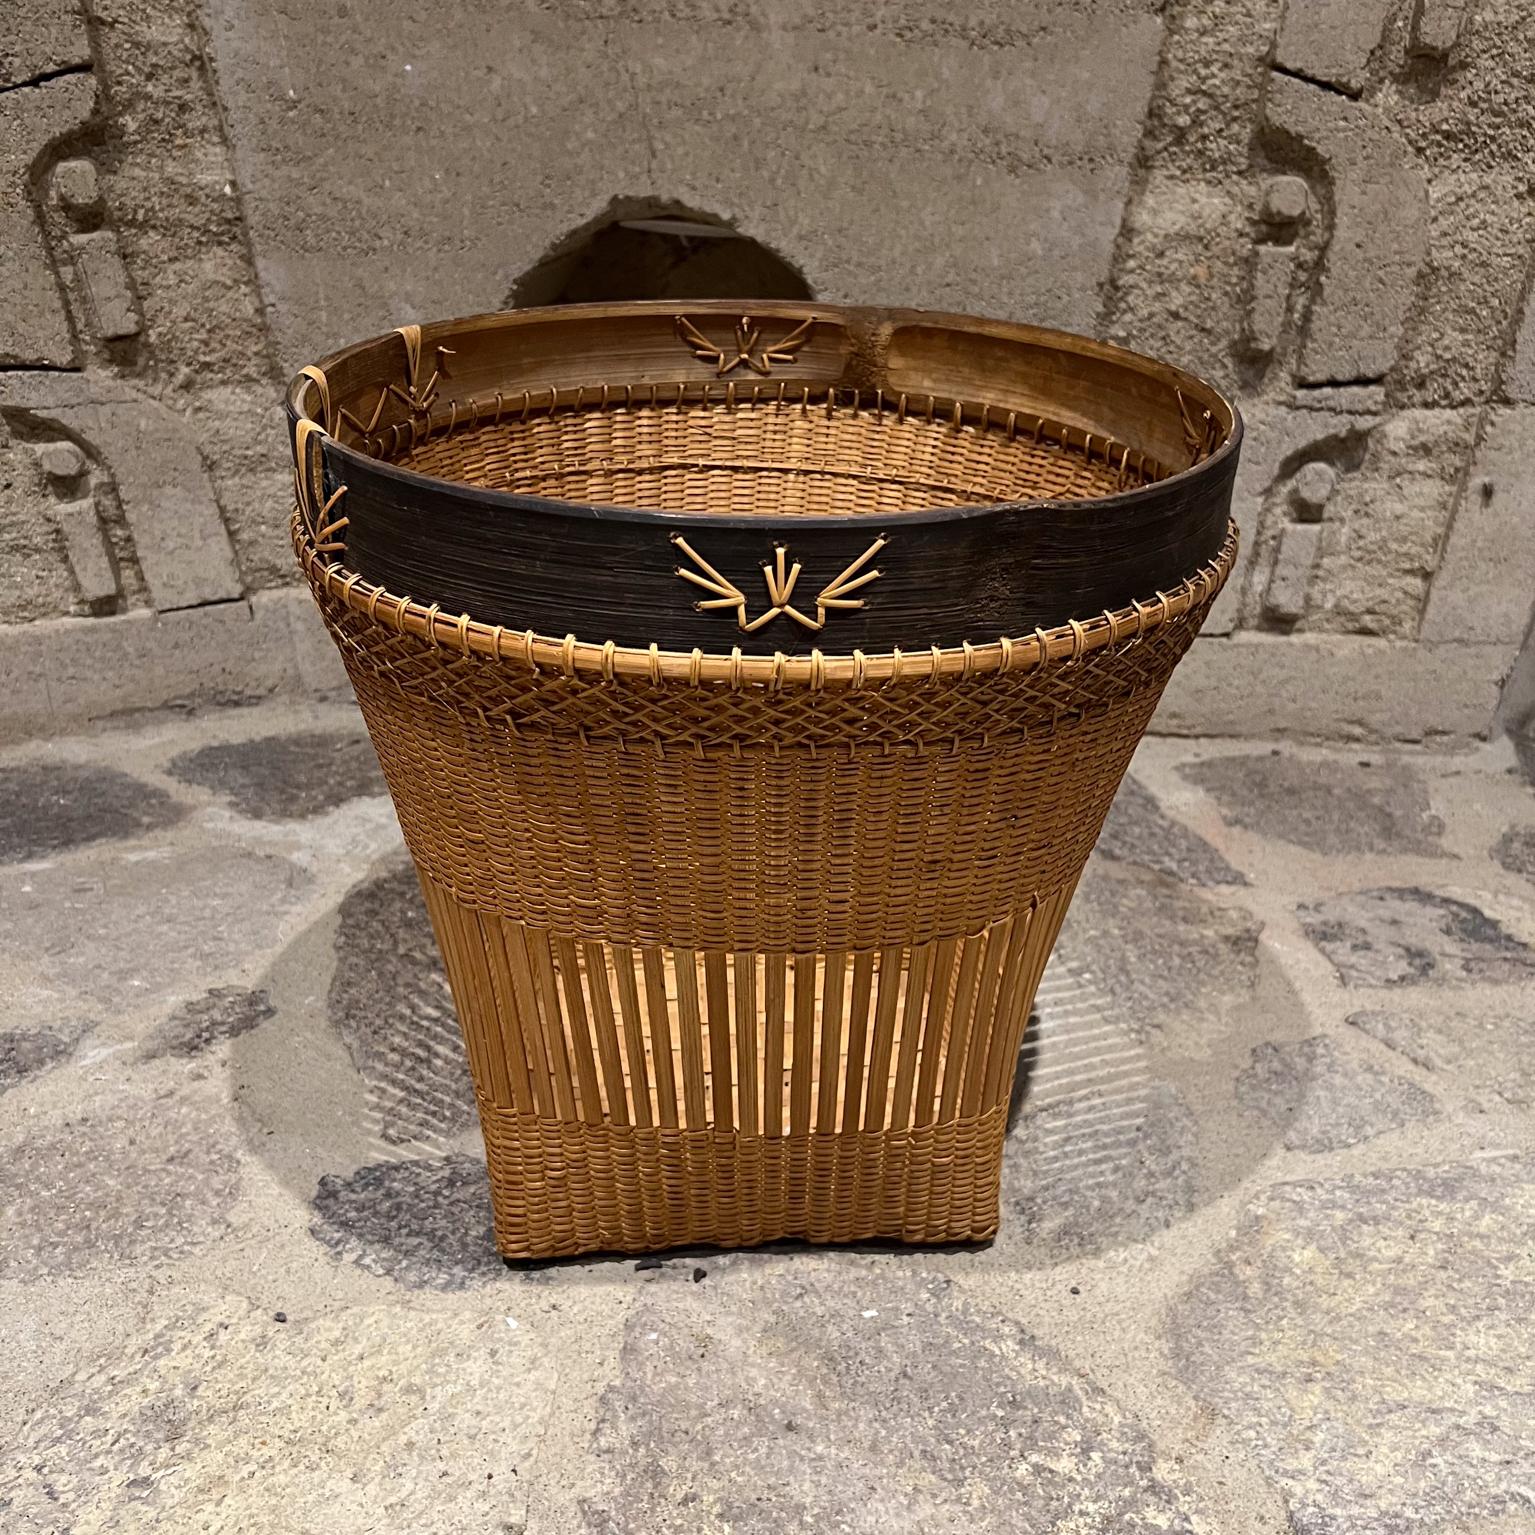 Handmade Woven Rattan Large Modern Basket
Natural fiber weave
14 h x 14.5 diameter
Clean presentation
No label
Original vintage condition, refer to images.